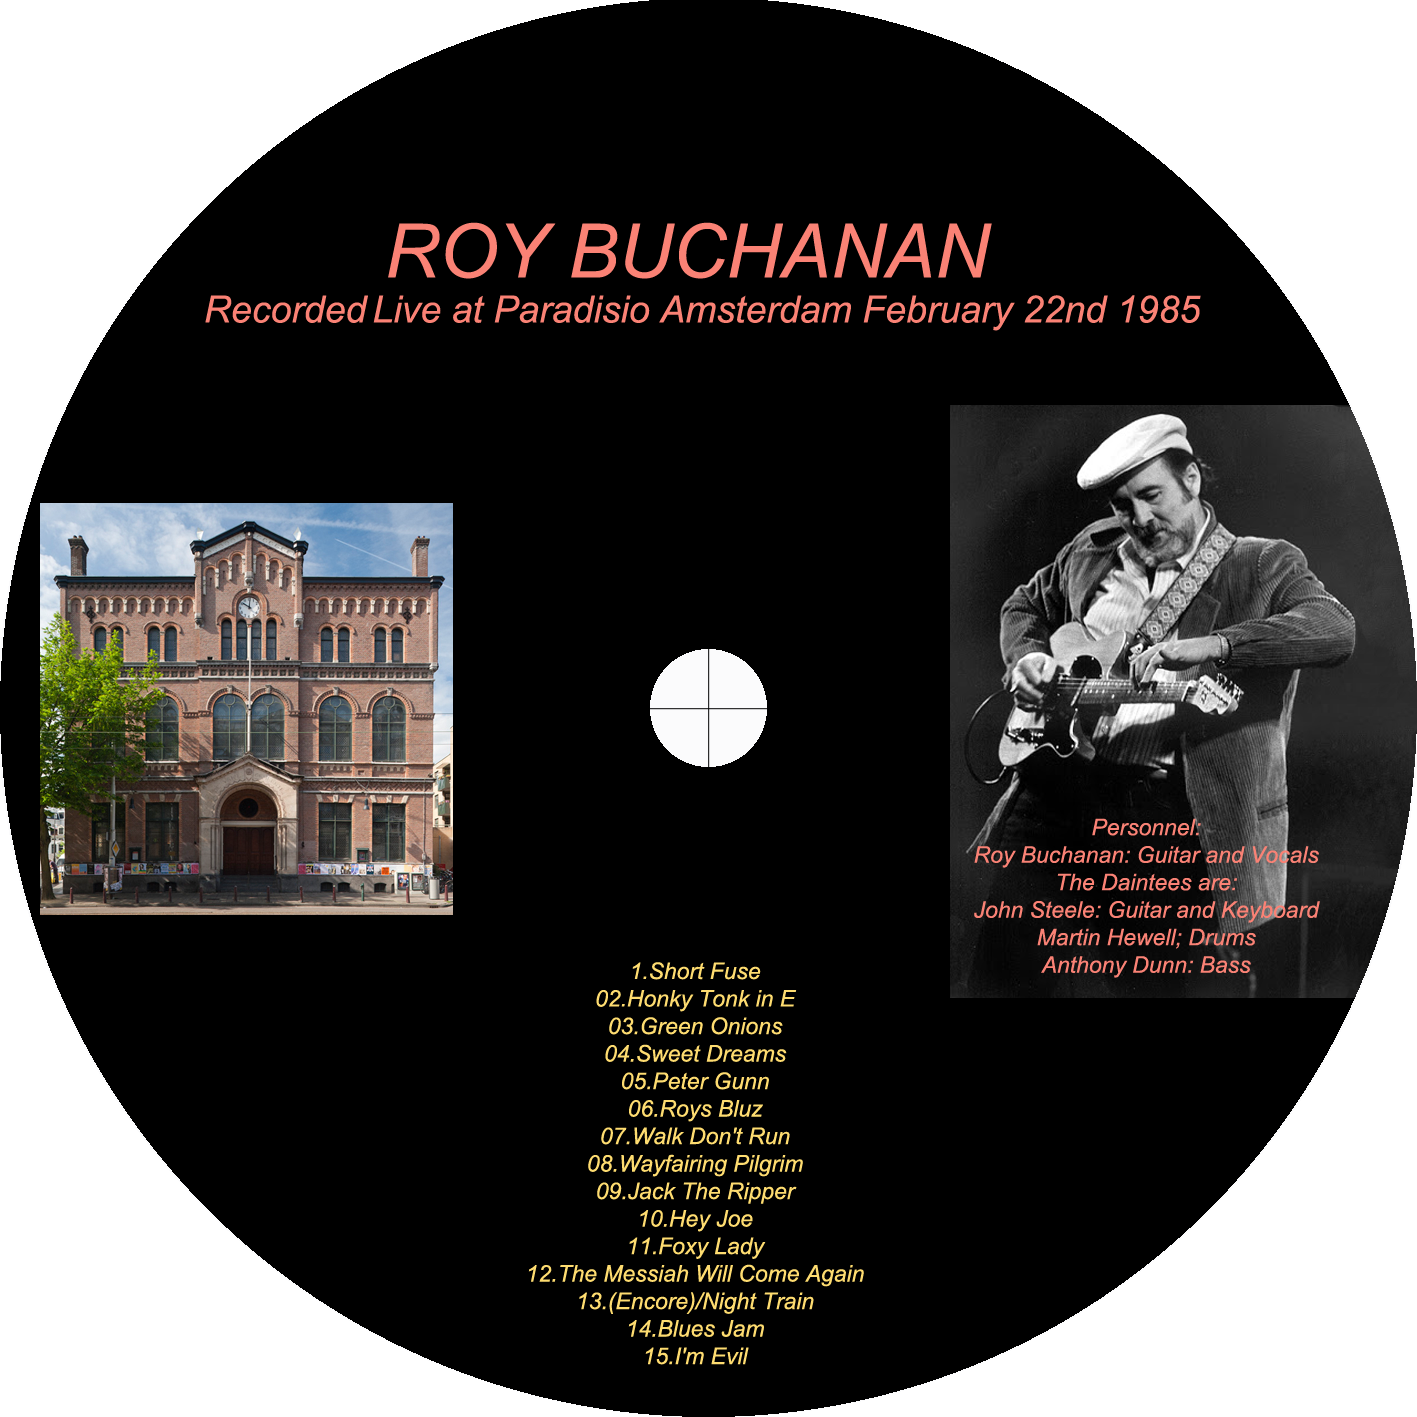 roy buchanan and the daintees cdr at paradisio amsterdam 1985 label